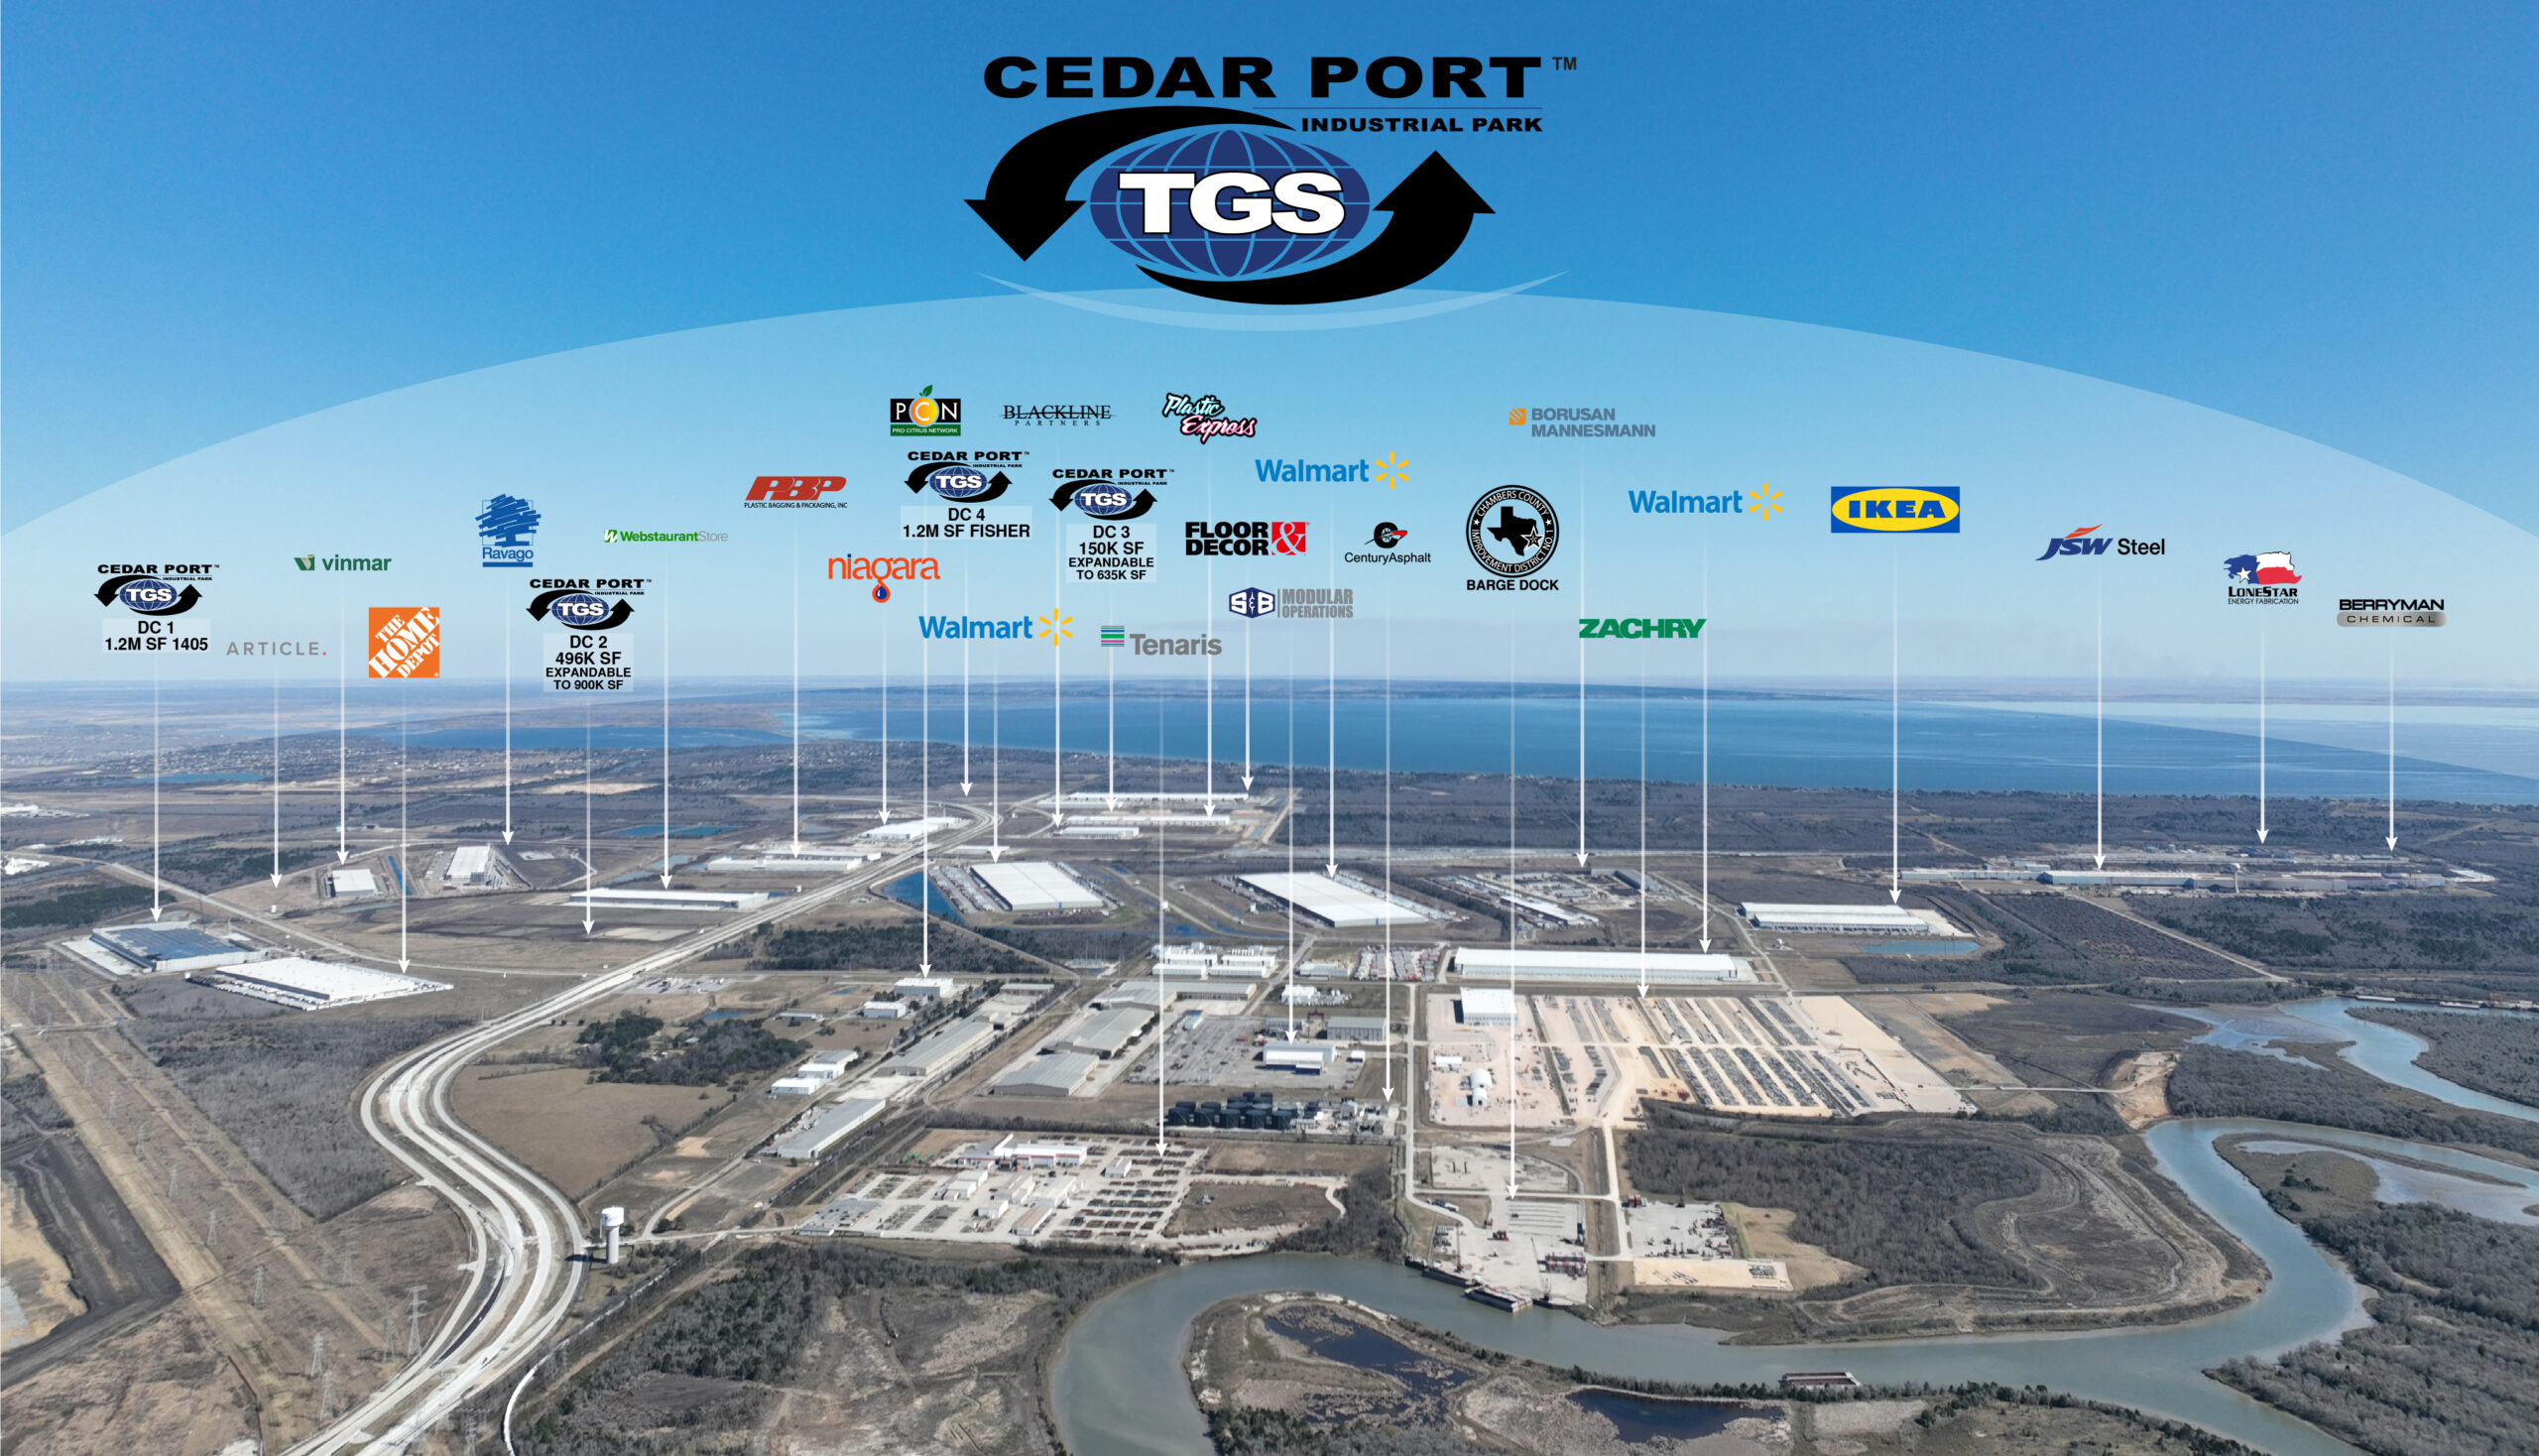 TGS Cedar Port Industrial Park announces 507,000-sq.-ft. build-to-suit warehouse for online furniture retailer Article Partners Real Estate